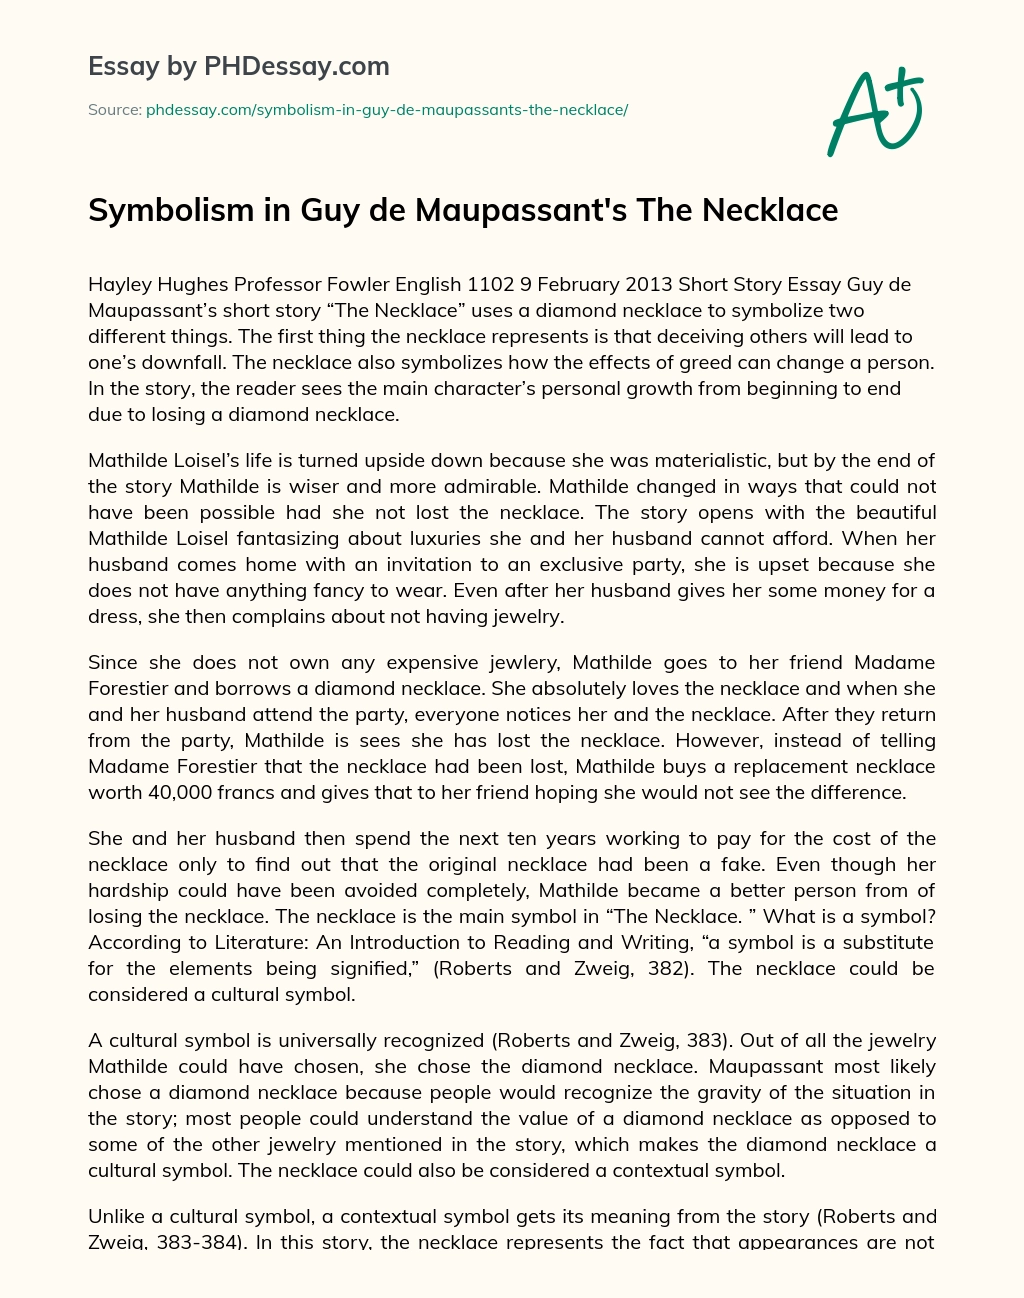 Symbolism in Guy de Maupassant’s The Necklace essay